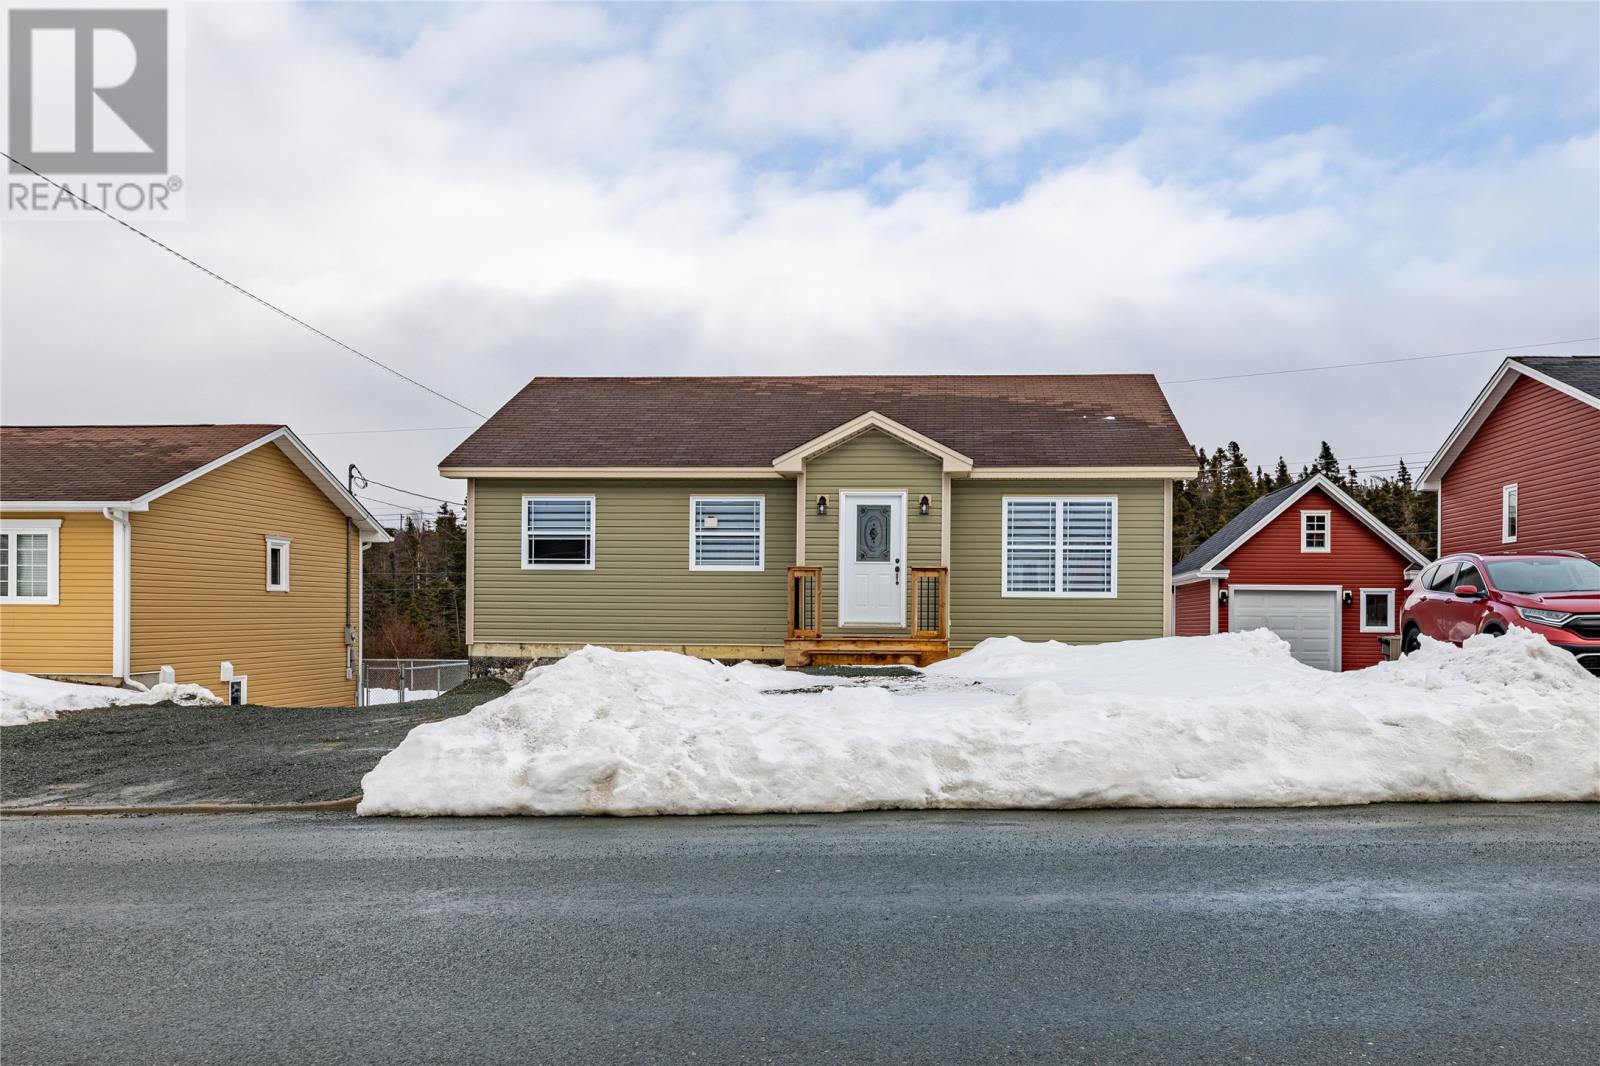 63 Comerfords Road Conception Bay South Newfoundland & Labrador Canada A1X4E1, for Sale, residential, Haris Barki, Keller Williams Platinum Realty